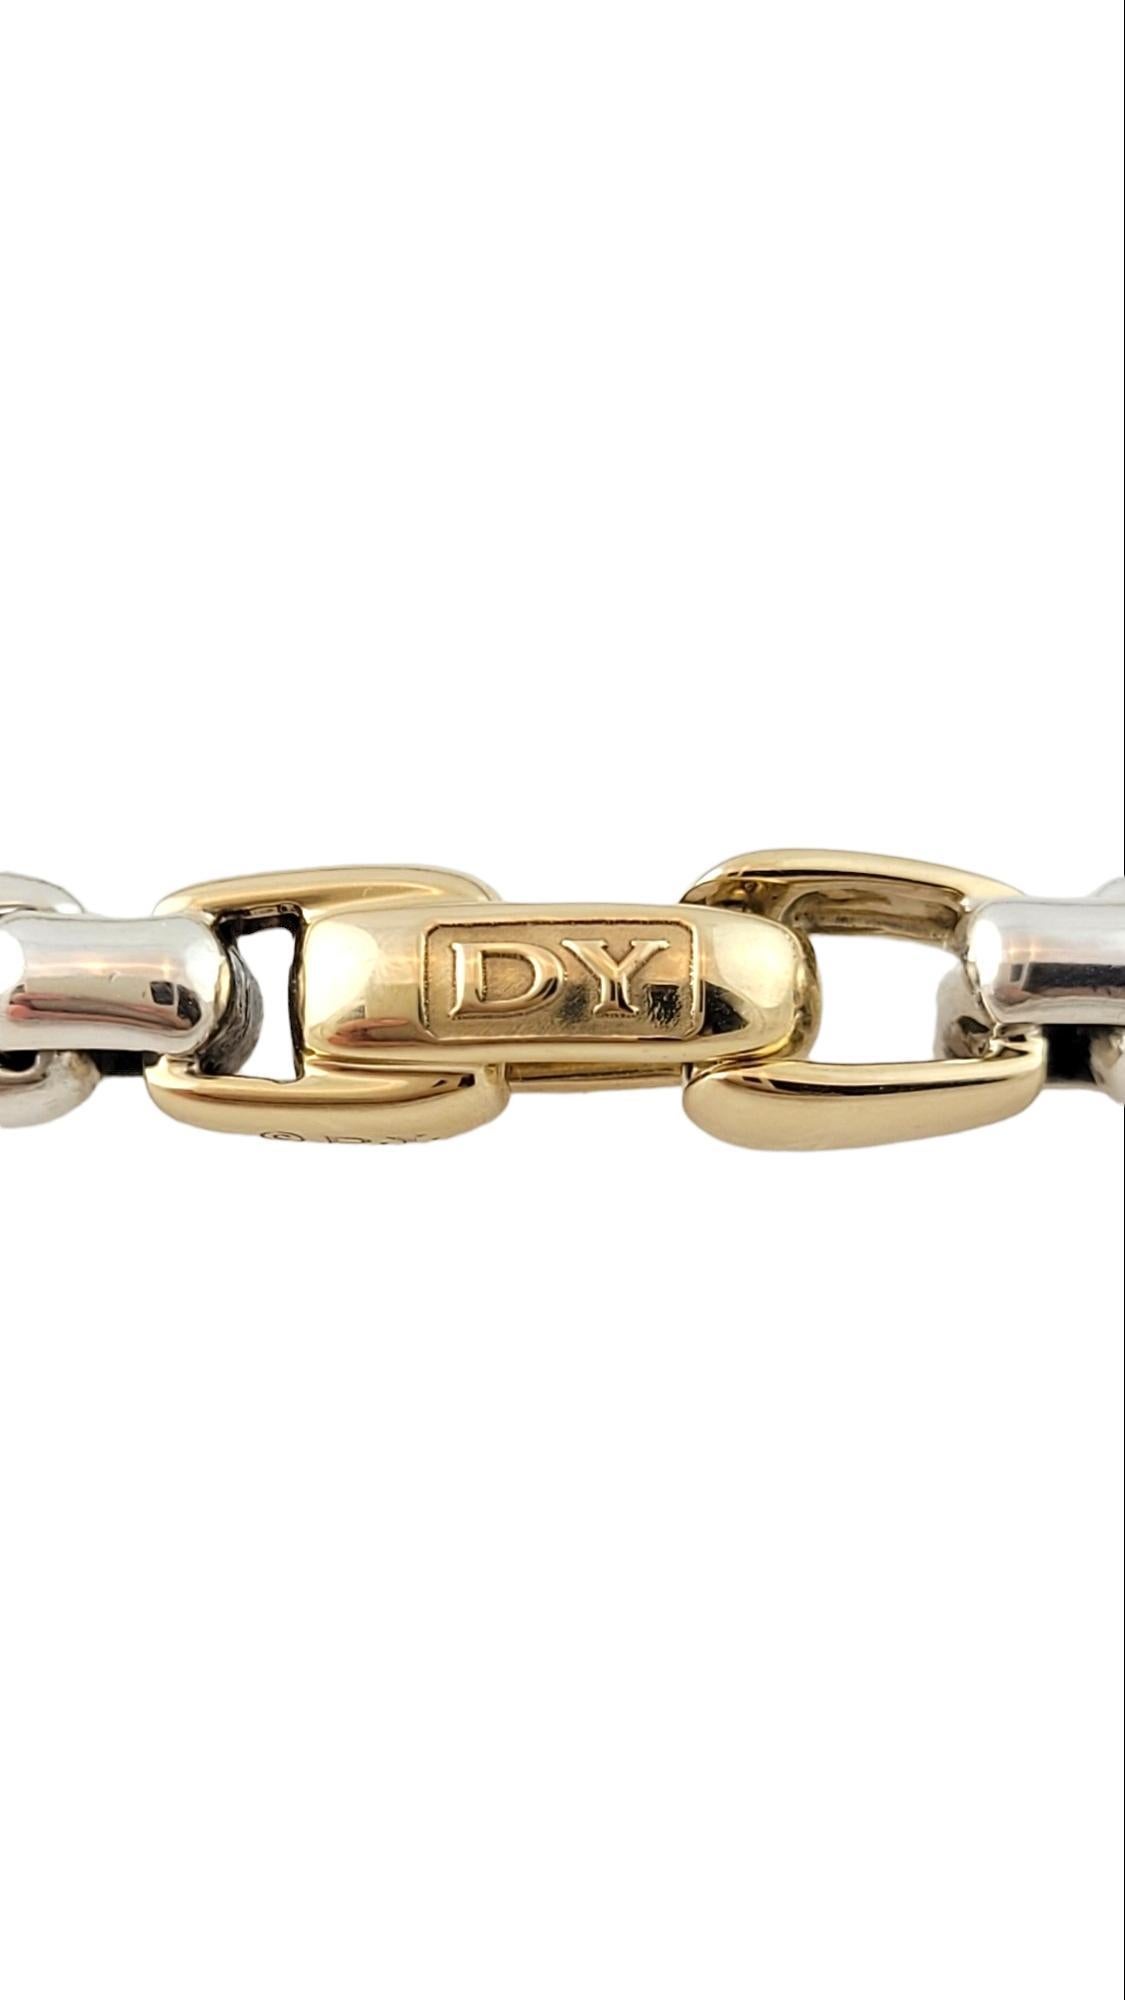 Women's David Yurman 14K & Sterling Silver Box Chain Bracelet with Box #15199 For Sale